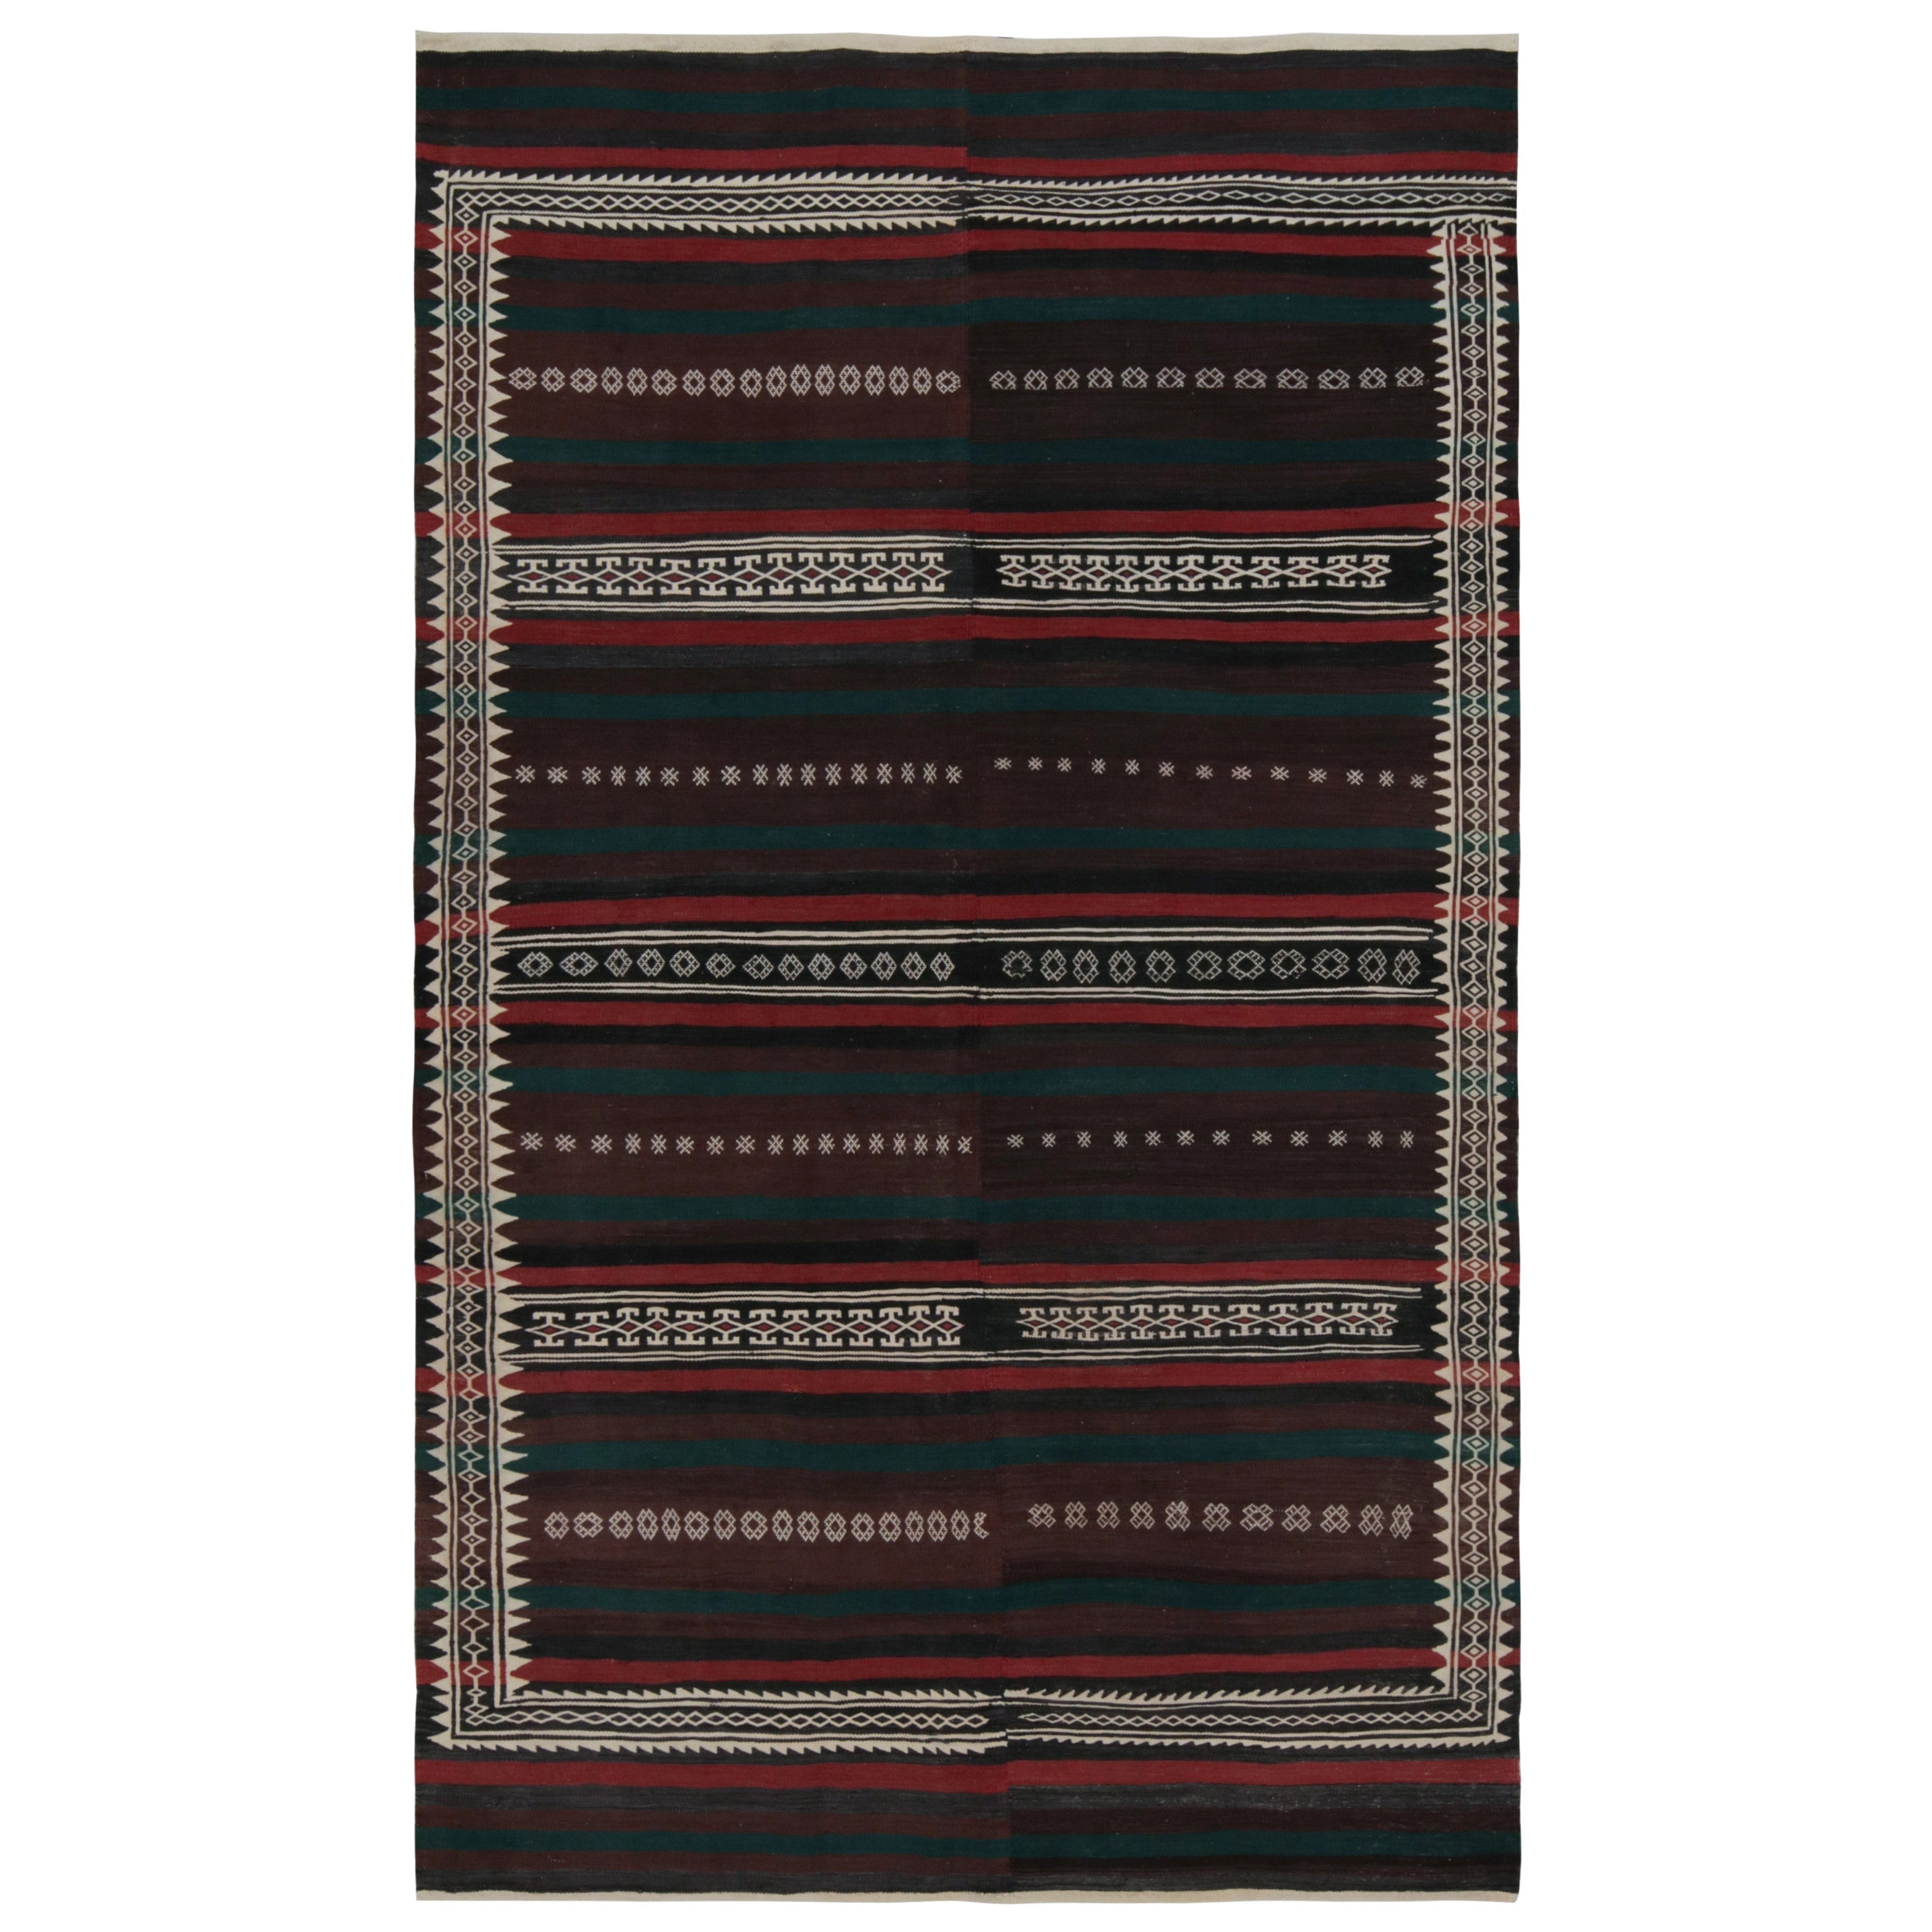 Vintage Afghan Tribal Kilim with Red-Brown Geometric Patterns, from Rug & Kilim For Sale